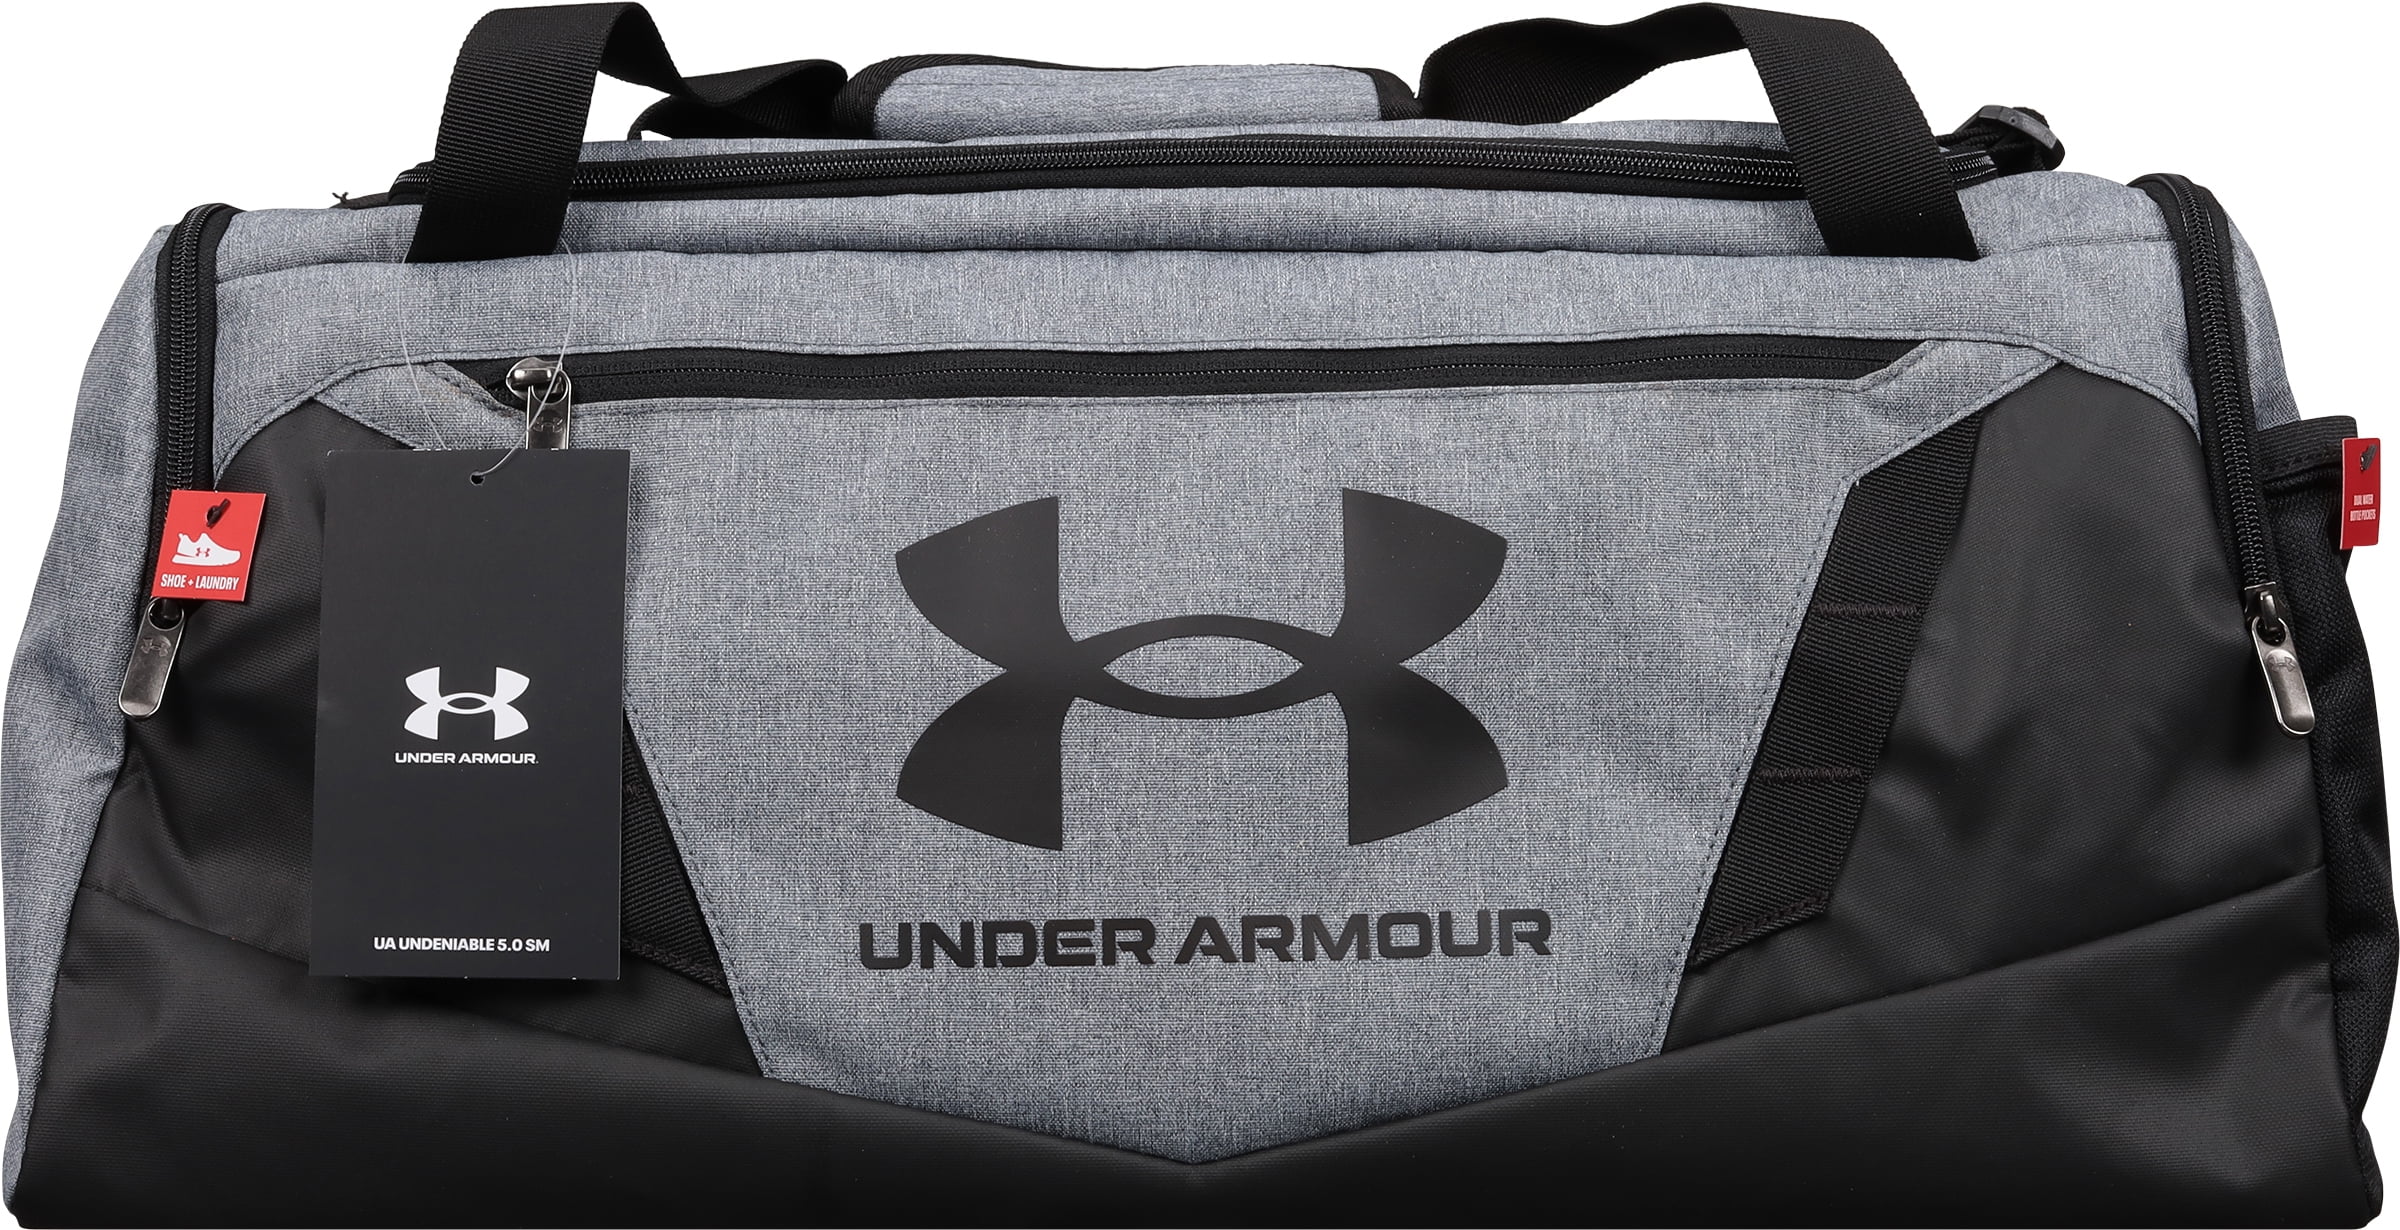 Under Armour Undeniable 5.0 Duffle sac de sport - Medium - Soccer Sport  Fitness